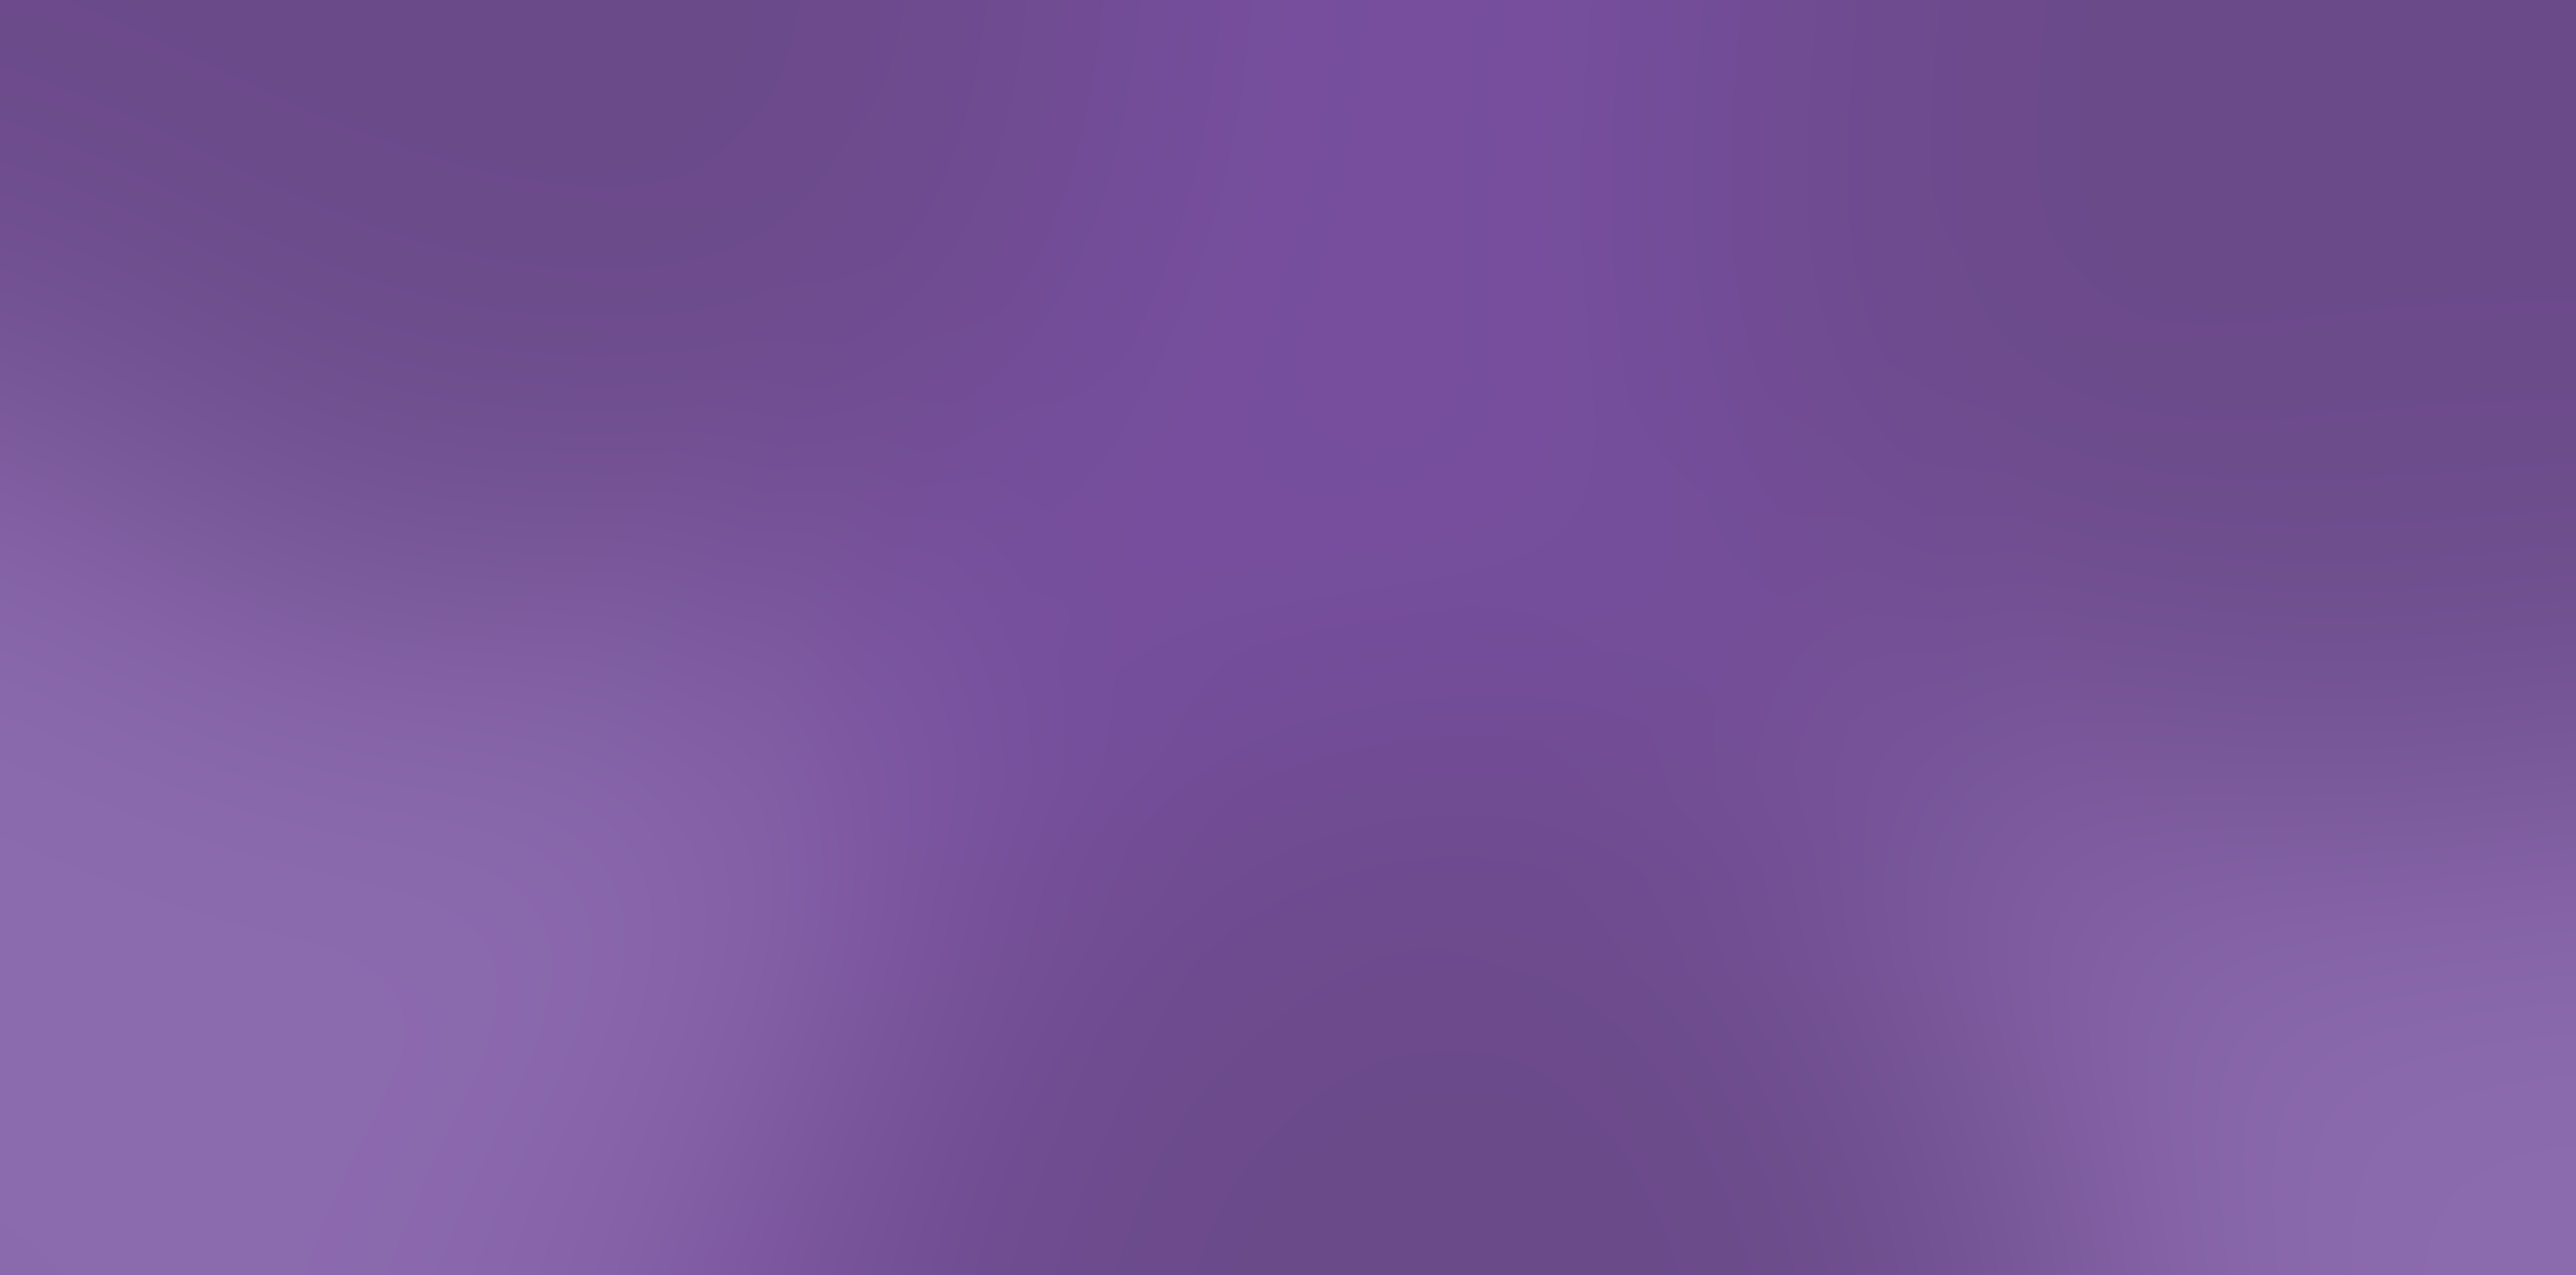 purple background image.